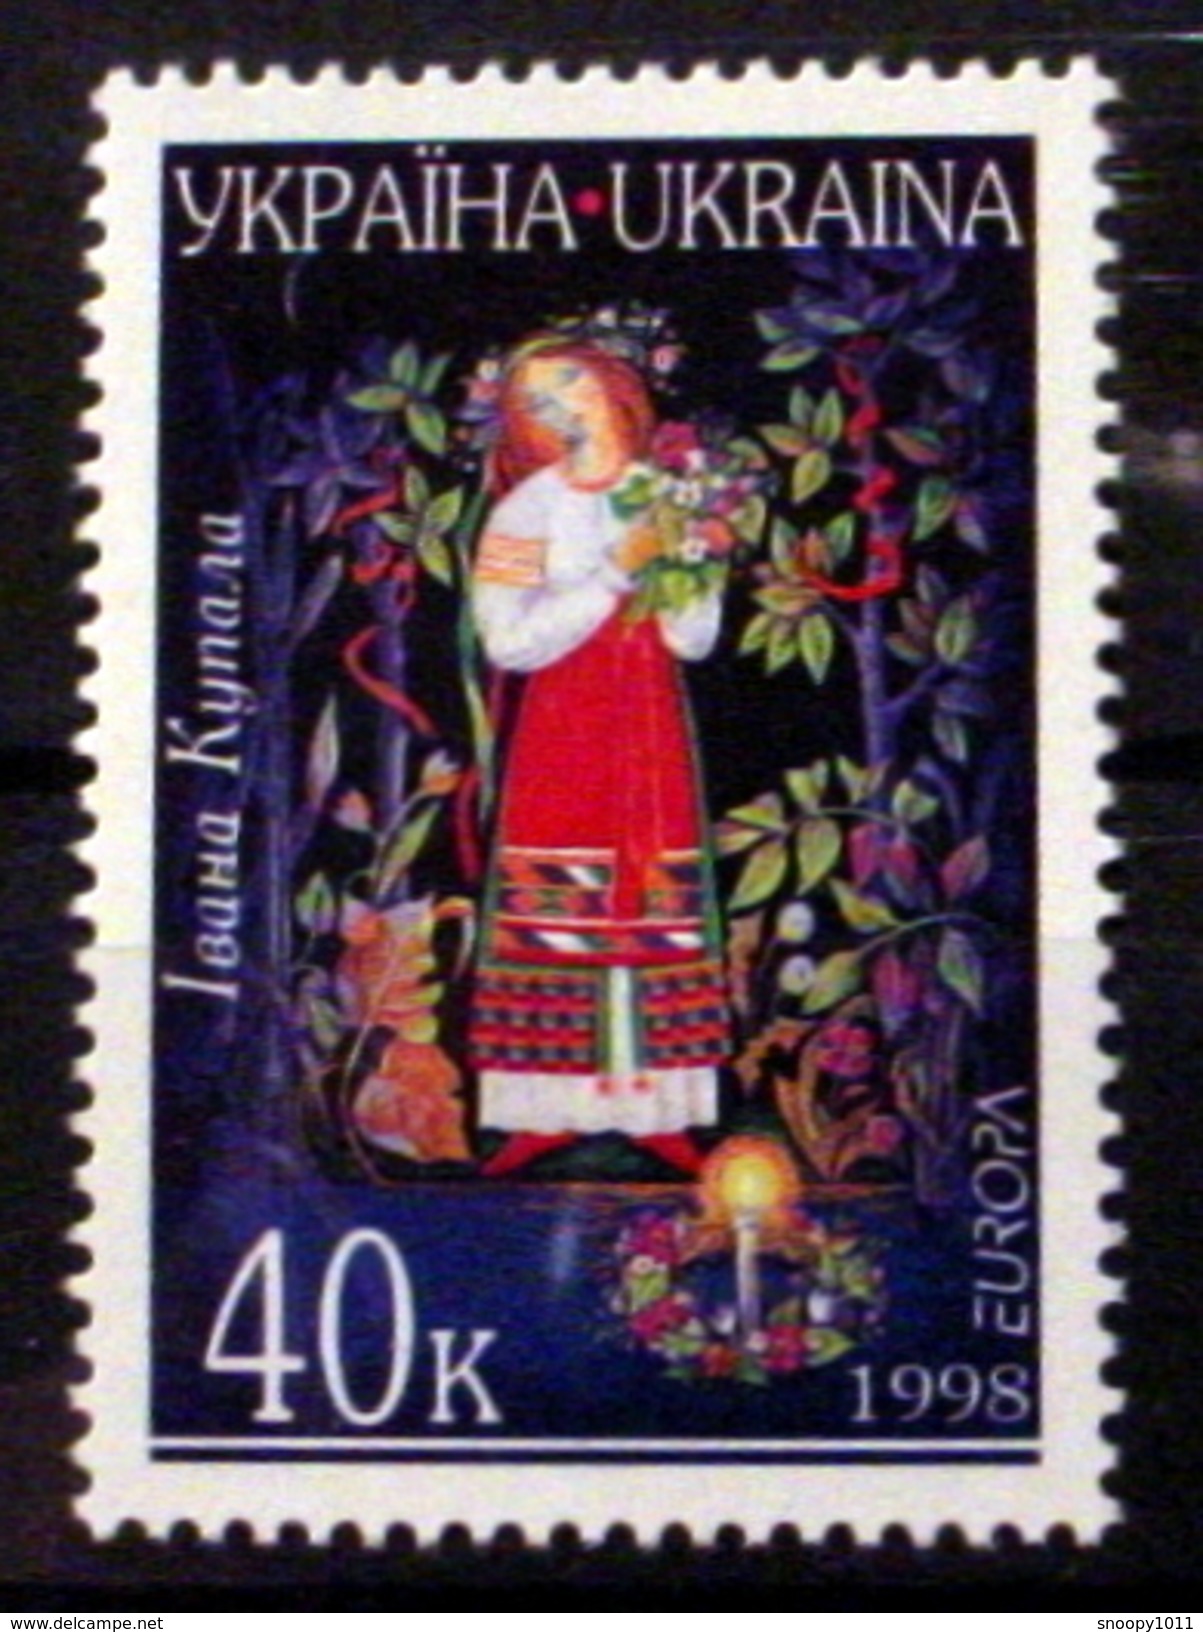 UKRAINE # 301,  40k,  Europa - Ivan Kupalo National Festival.  MNH (**) - Ukraine